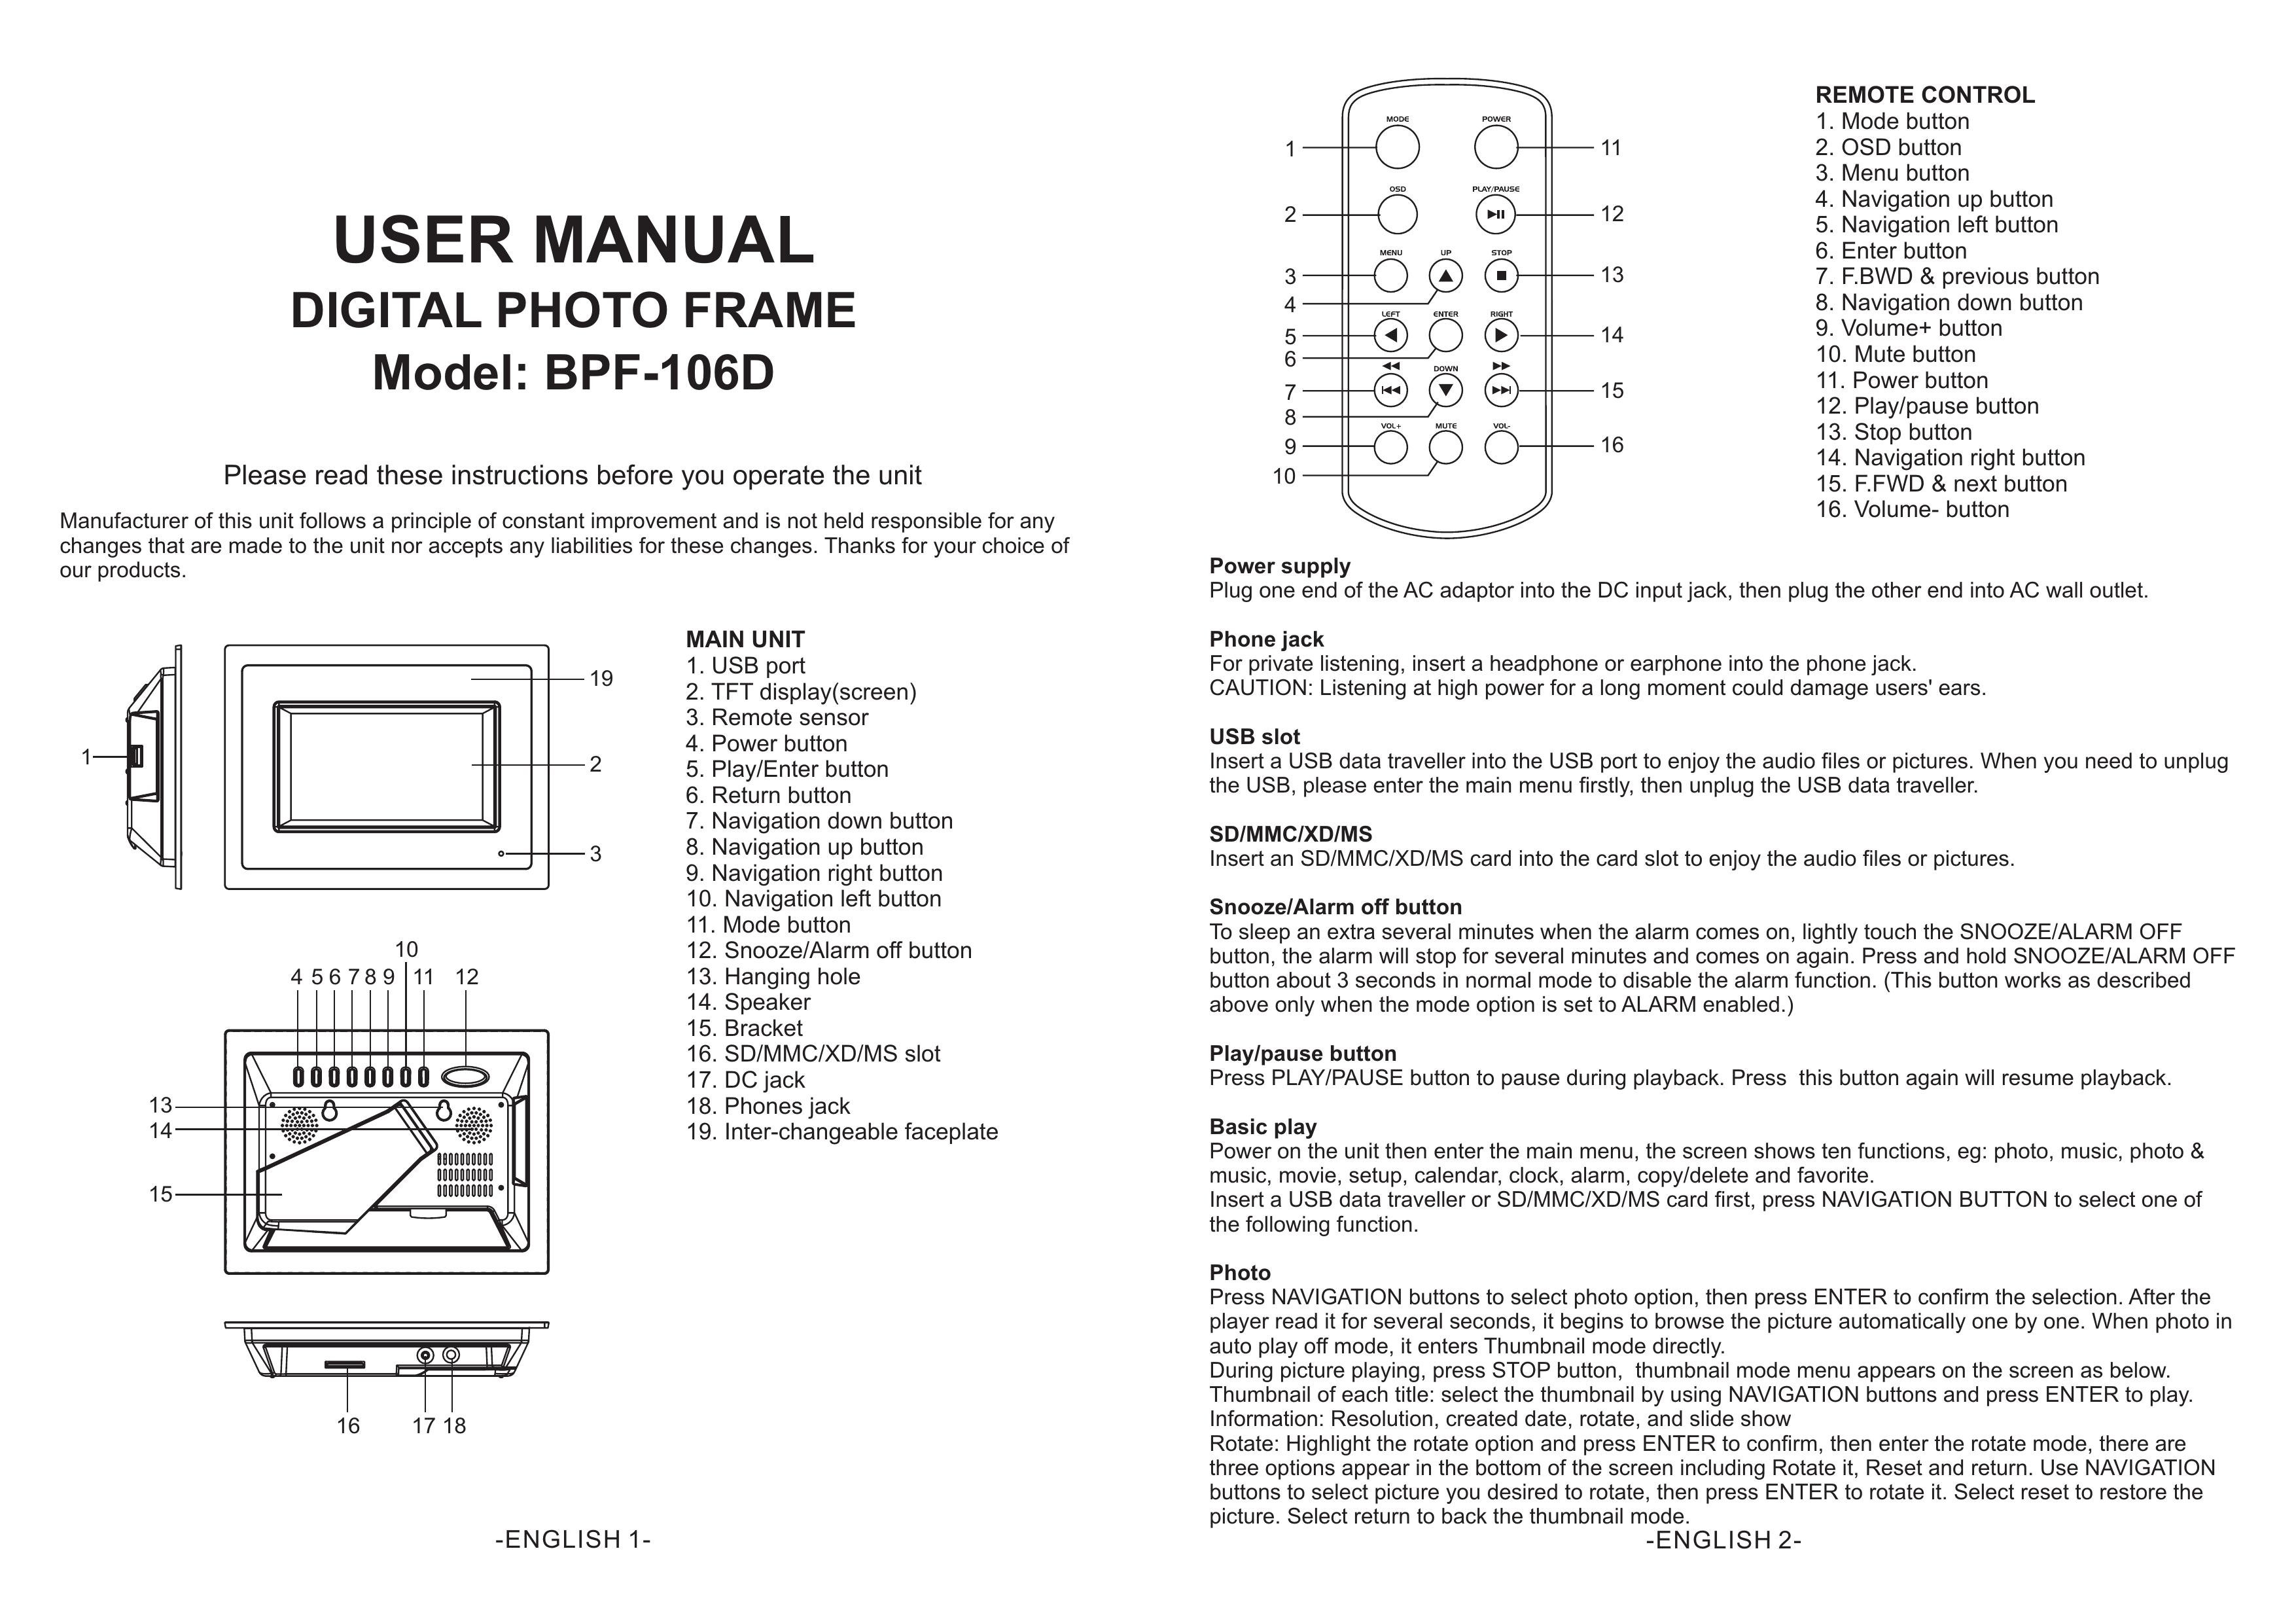 Emprex BPF-106D Digital Photo Frame User Manual